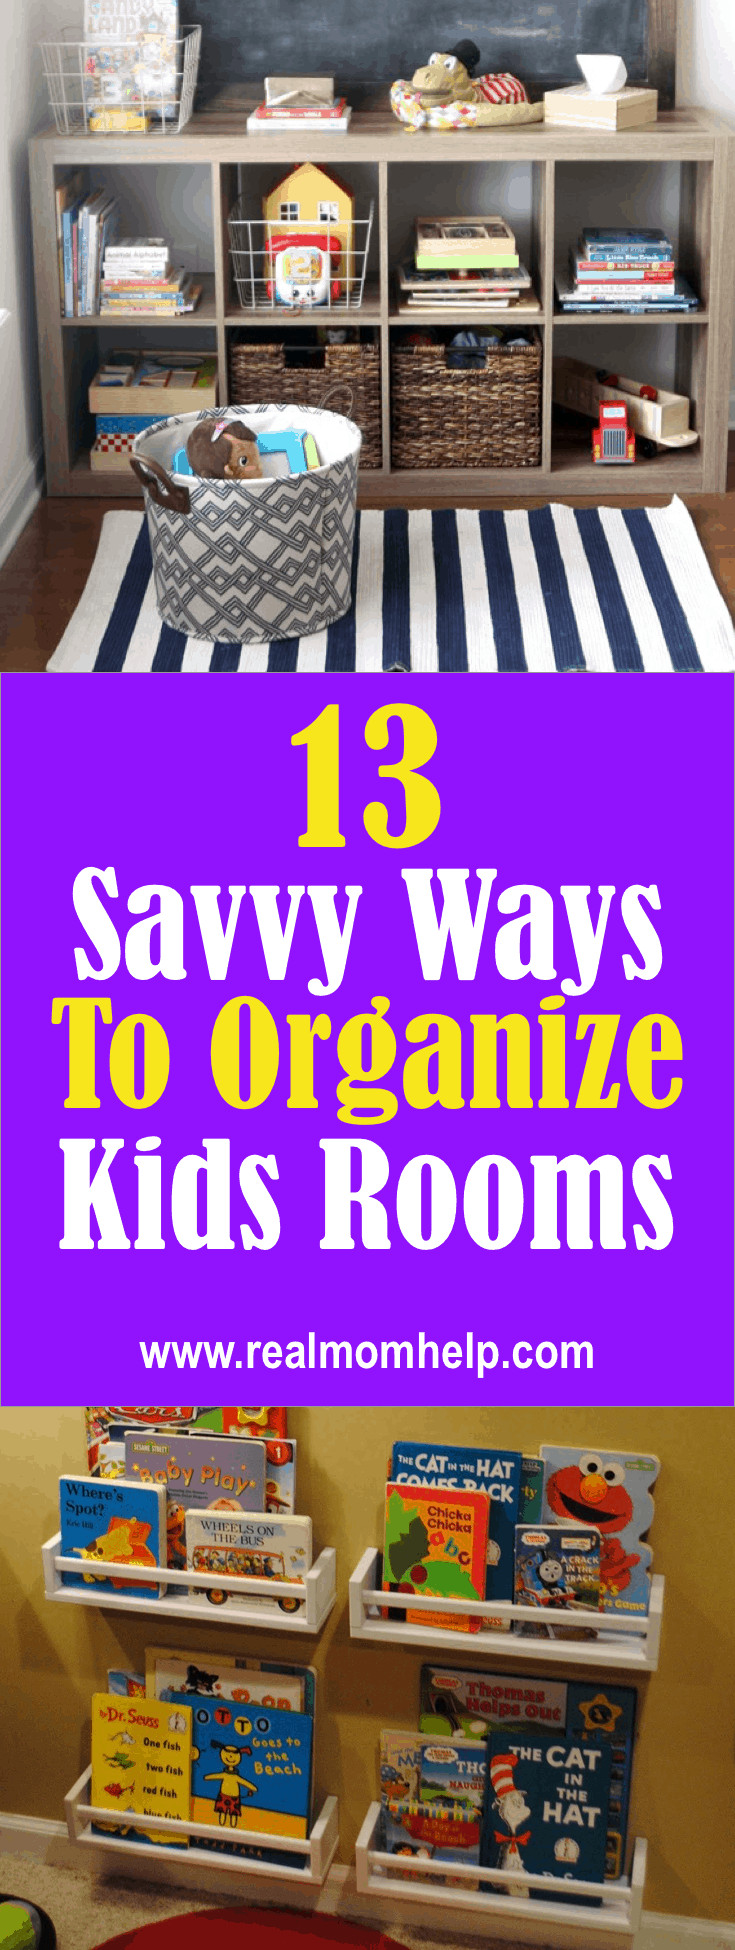 Ways To Organize Kids Room
 13 Savvy Ways to Organize Kids Rooms